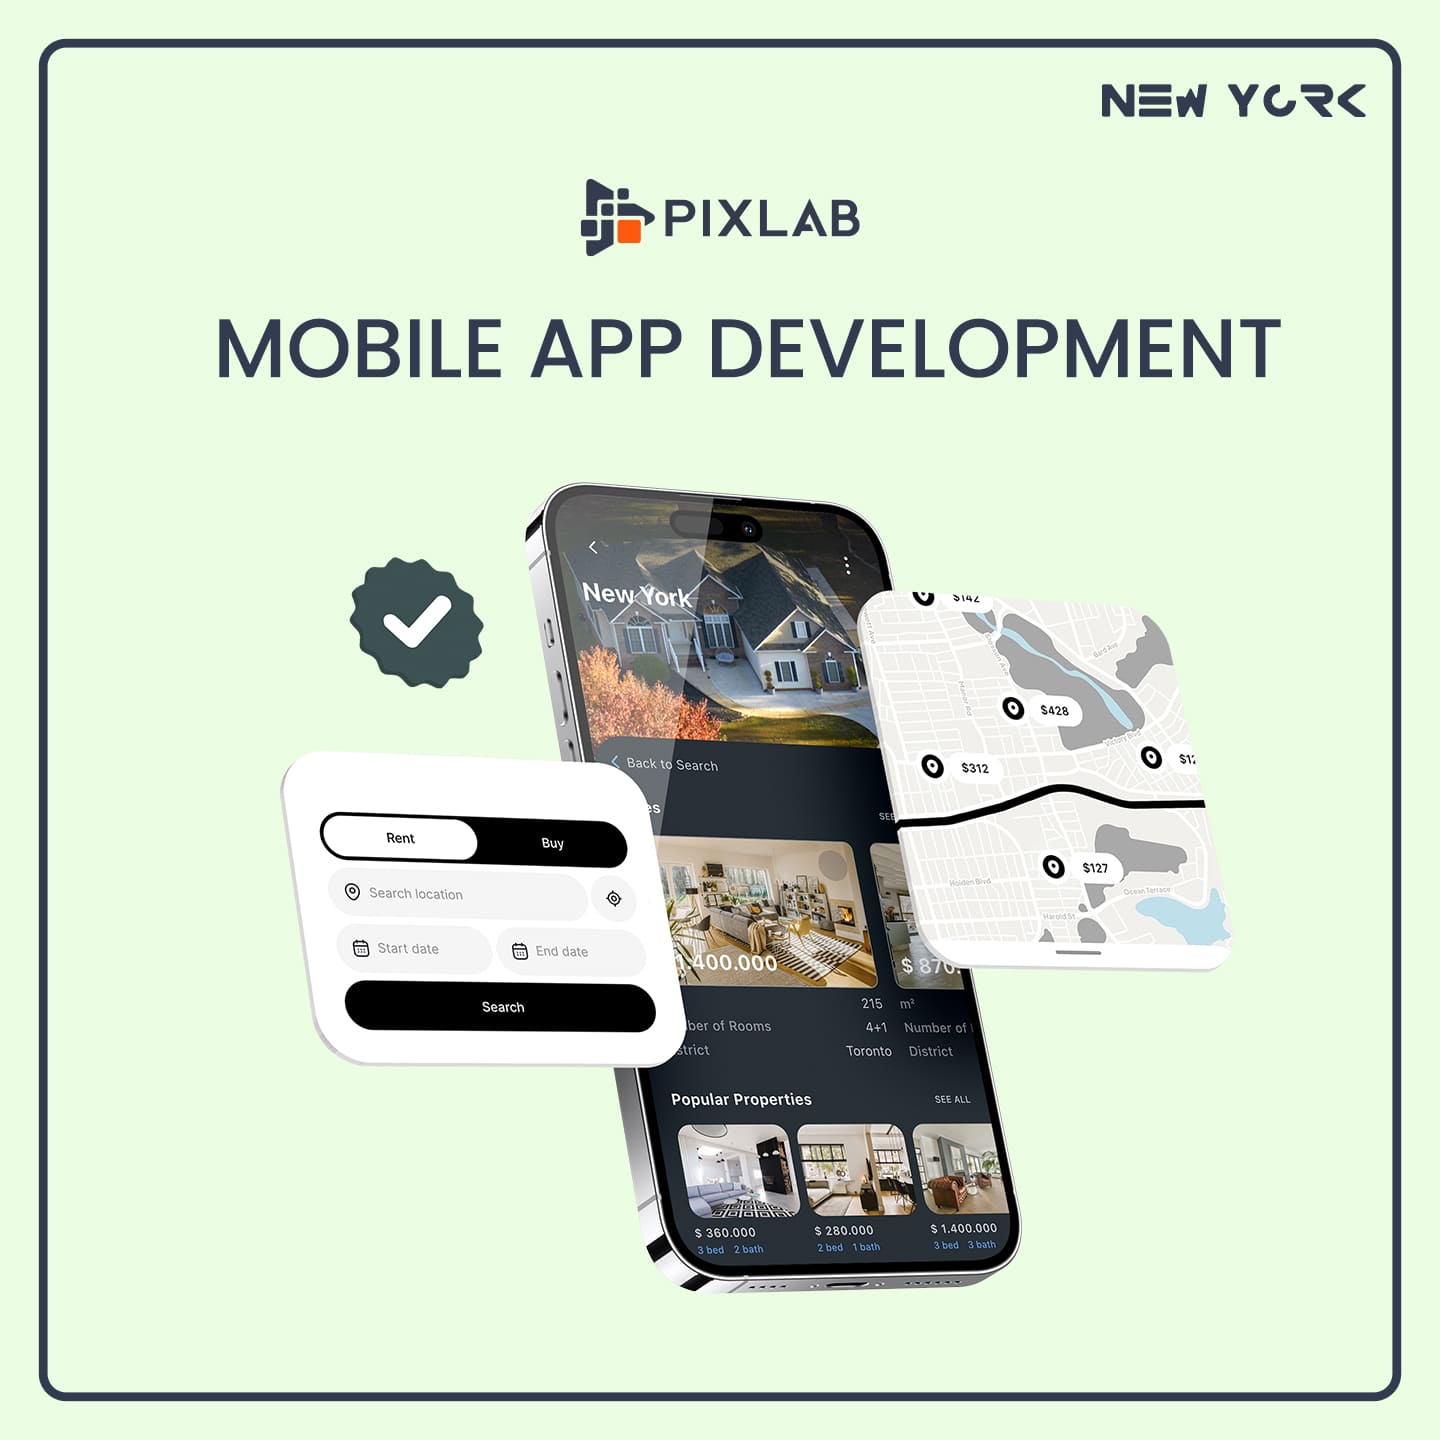 Pixlab's Mobile App Development Services in New York